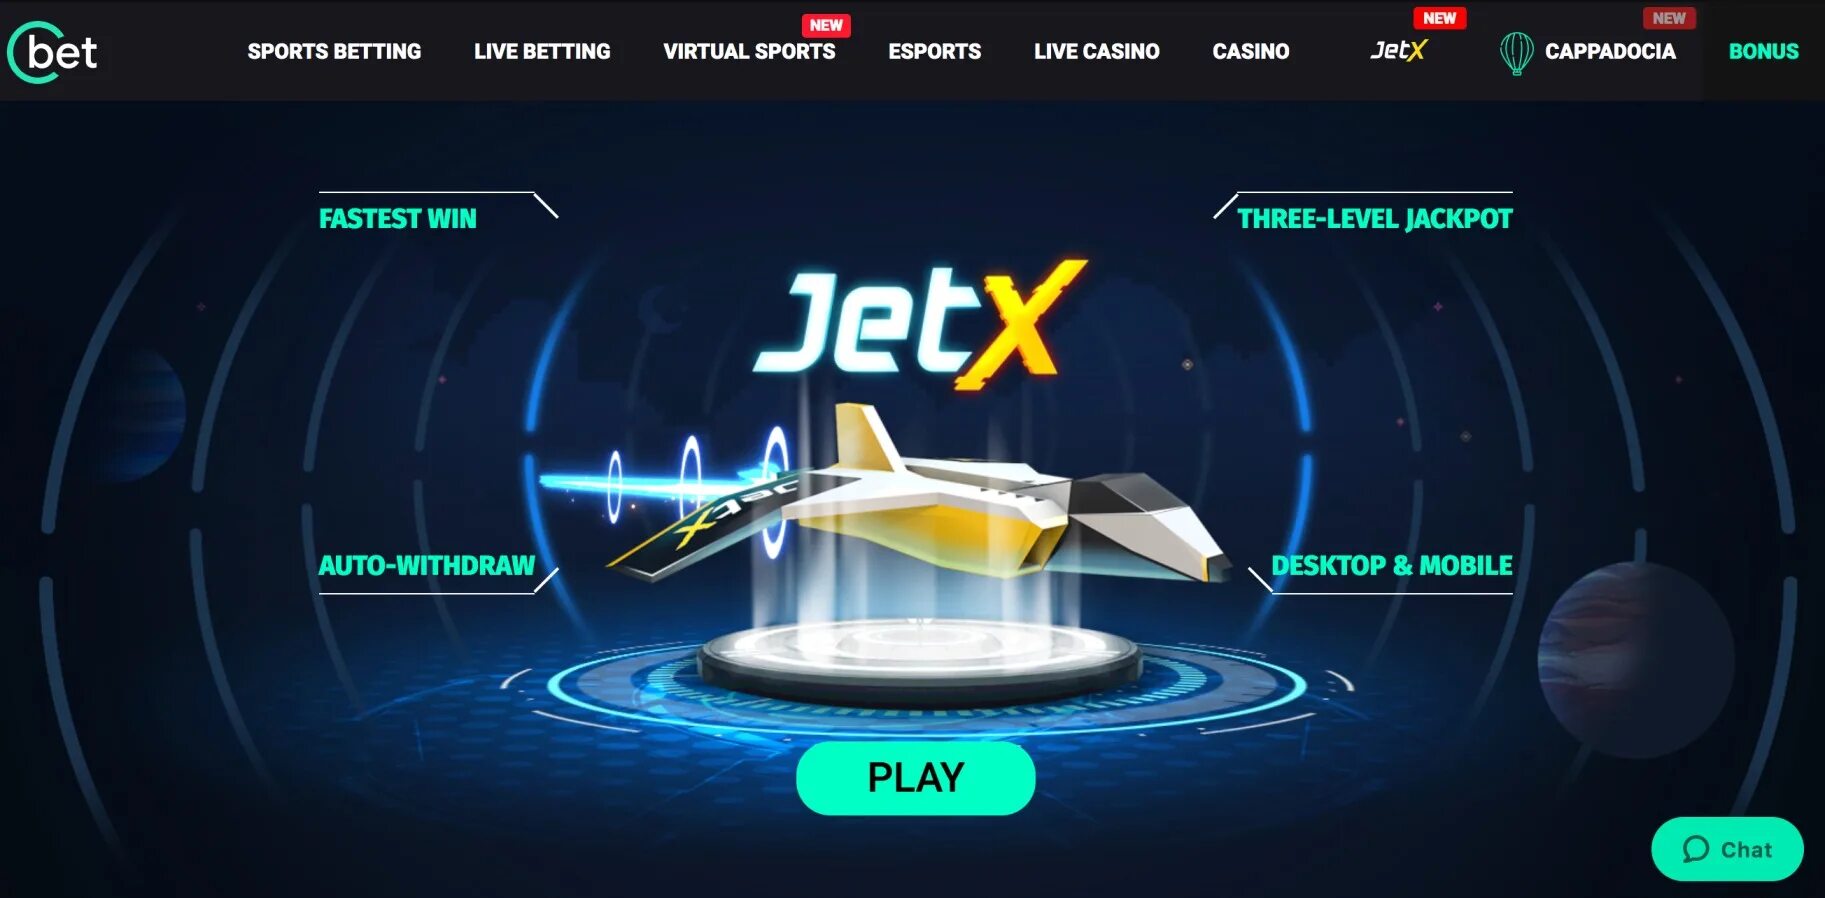 JETX Casino. Jet x. Jet x игра казино. JETX Slot. Лаки джет играть демо счет